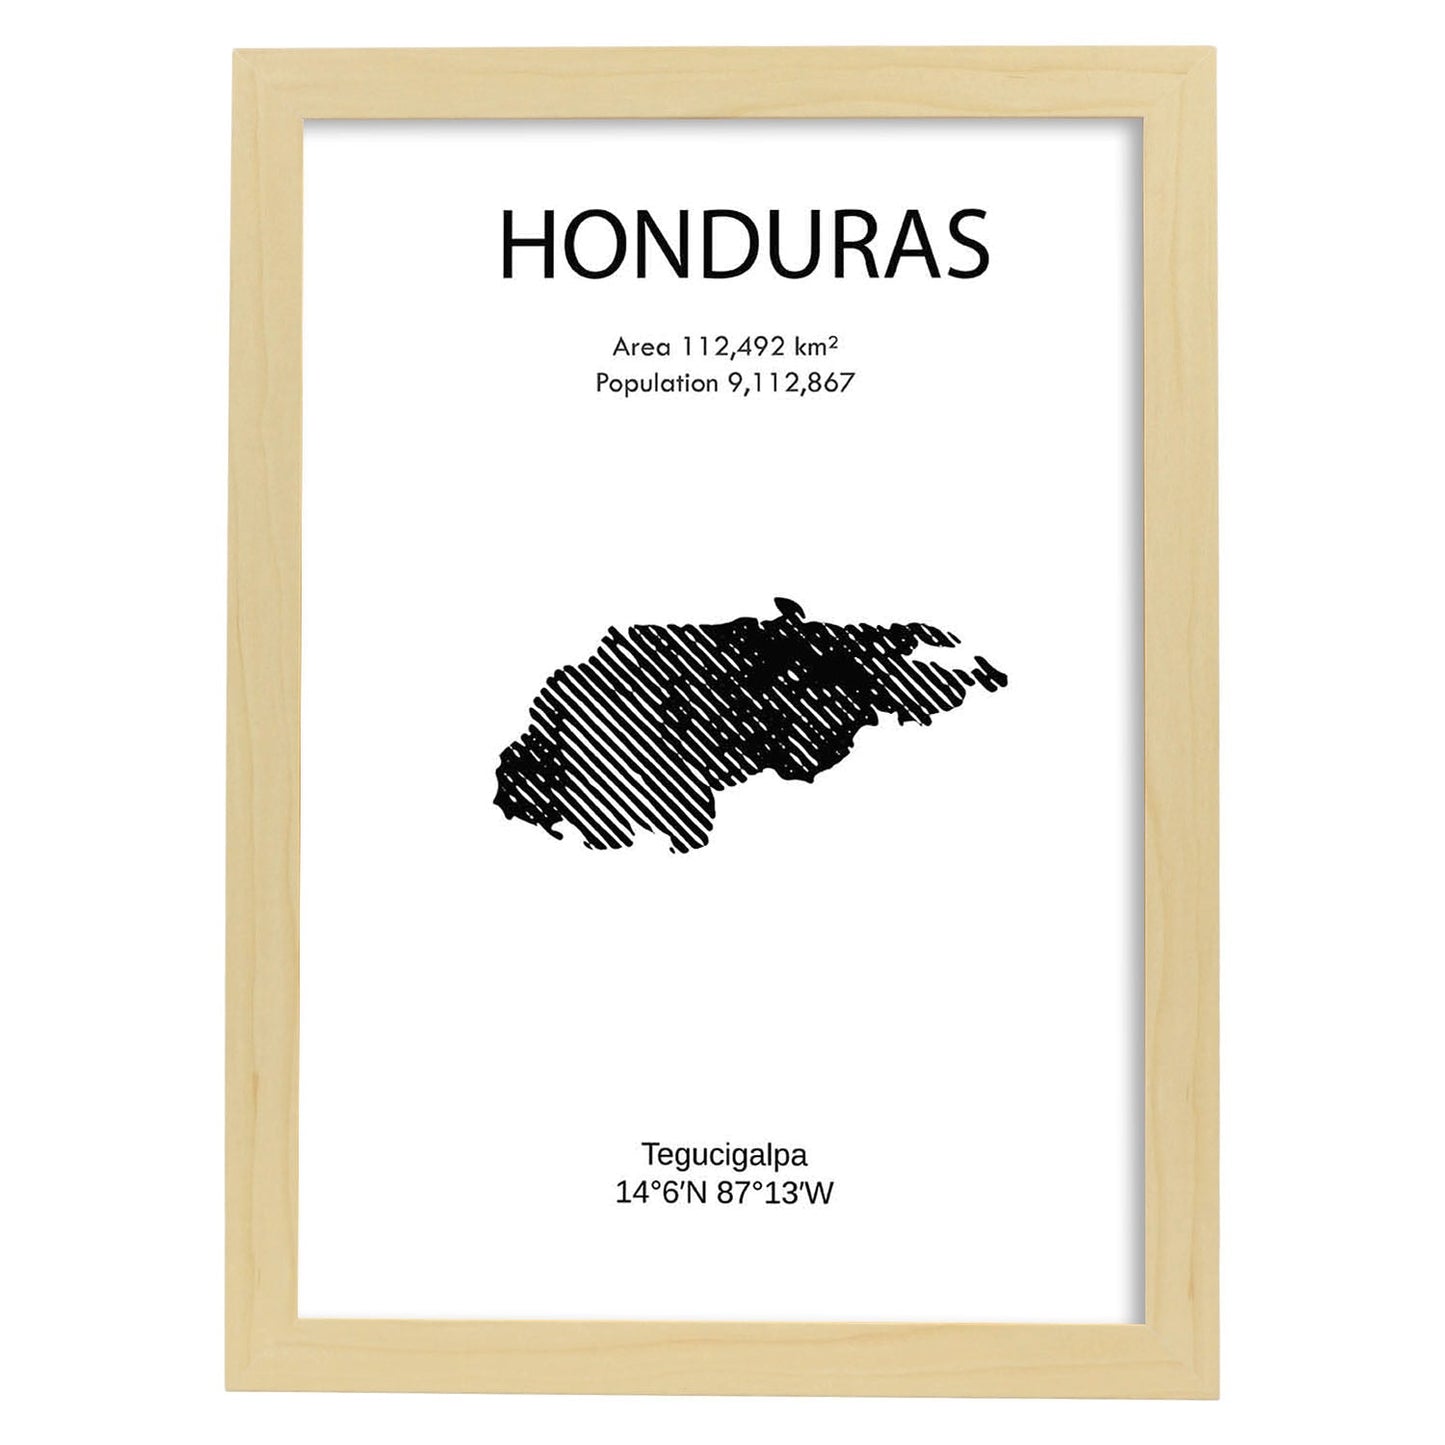 Poster de Honduras. Láminas de paises y continentes del mundo.-Artwork-Nacnic-A4-Marco Madera clara-Nacnic Estudio SL